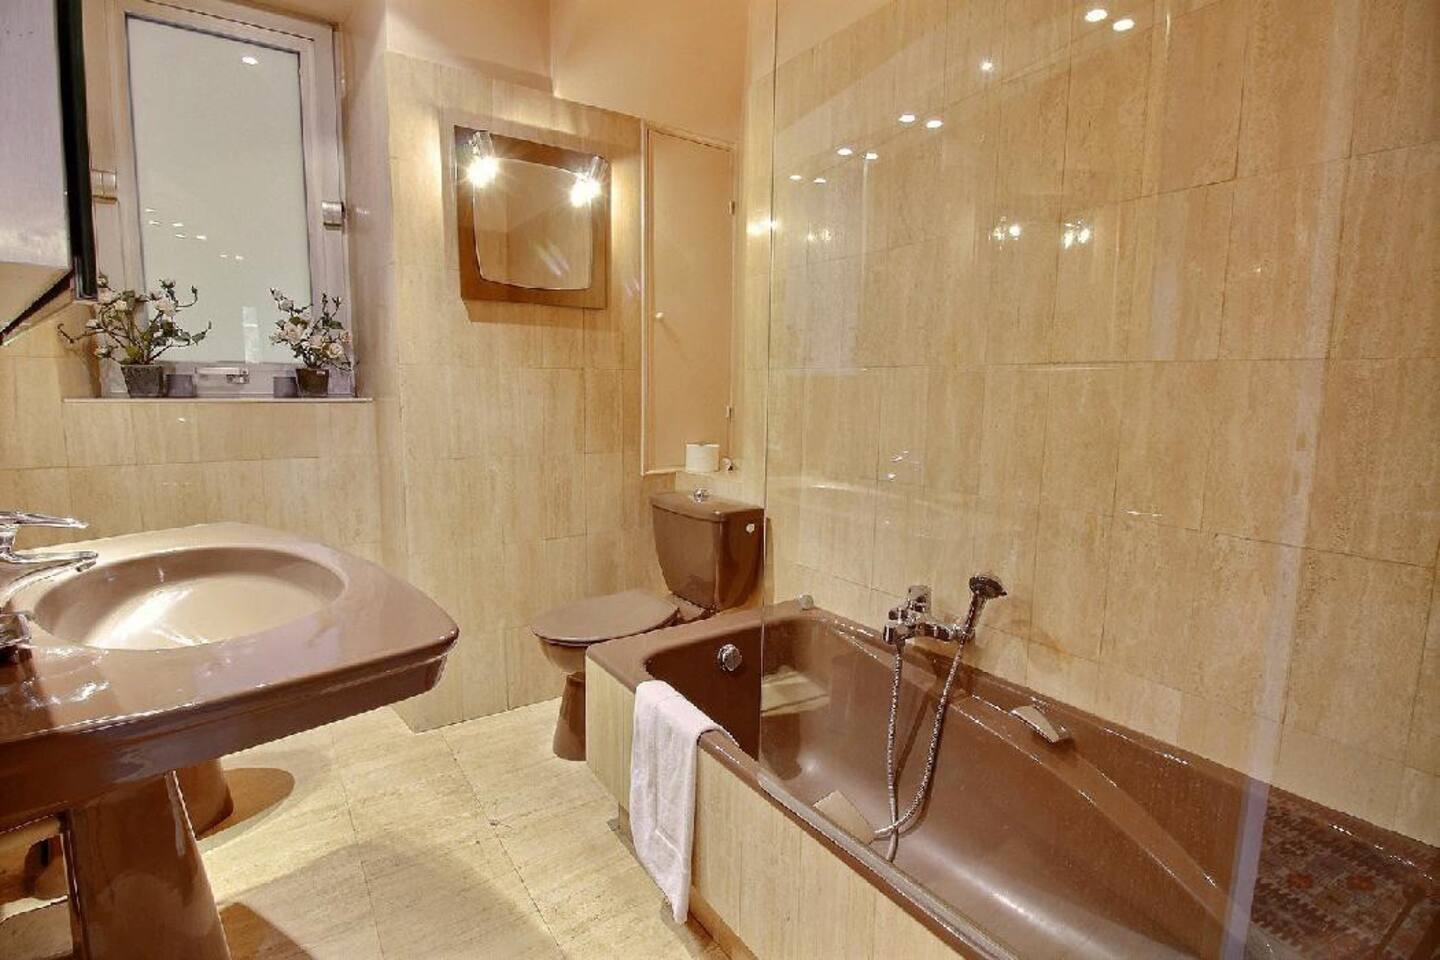 The bathroom it features a bathtub, toilets, a large washbasin and a bidet.